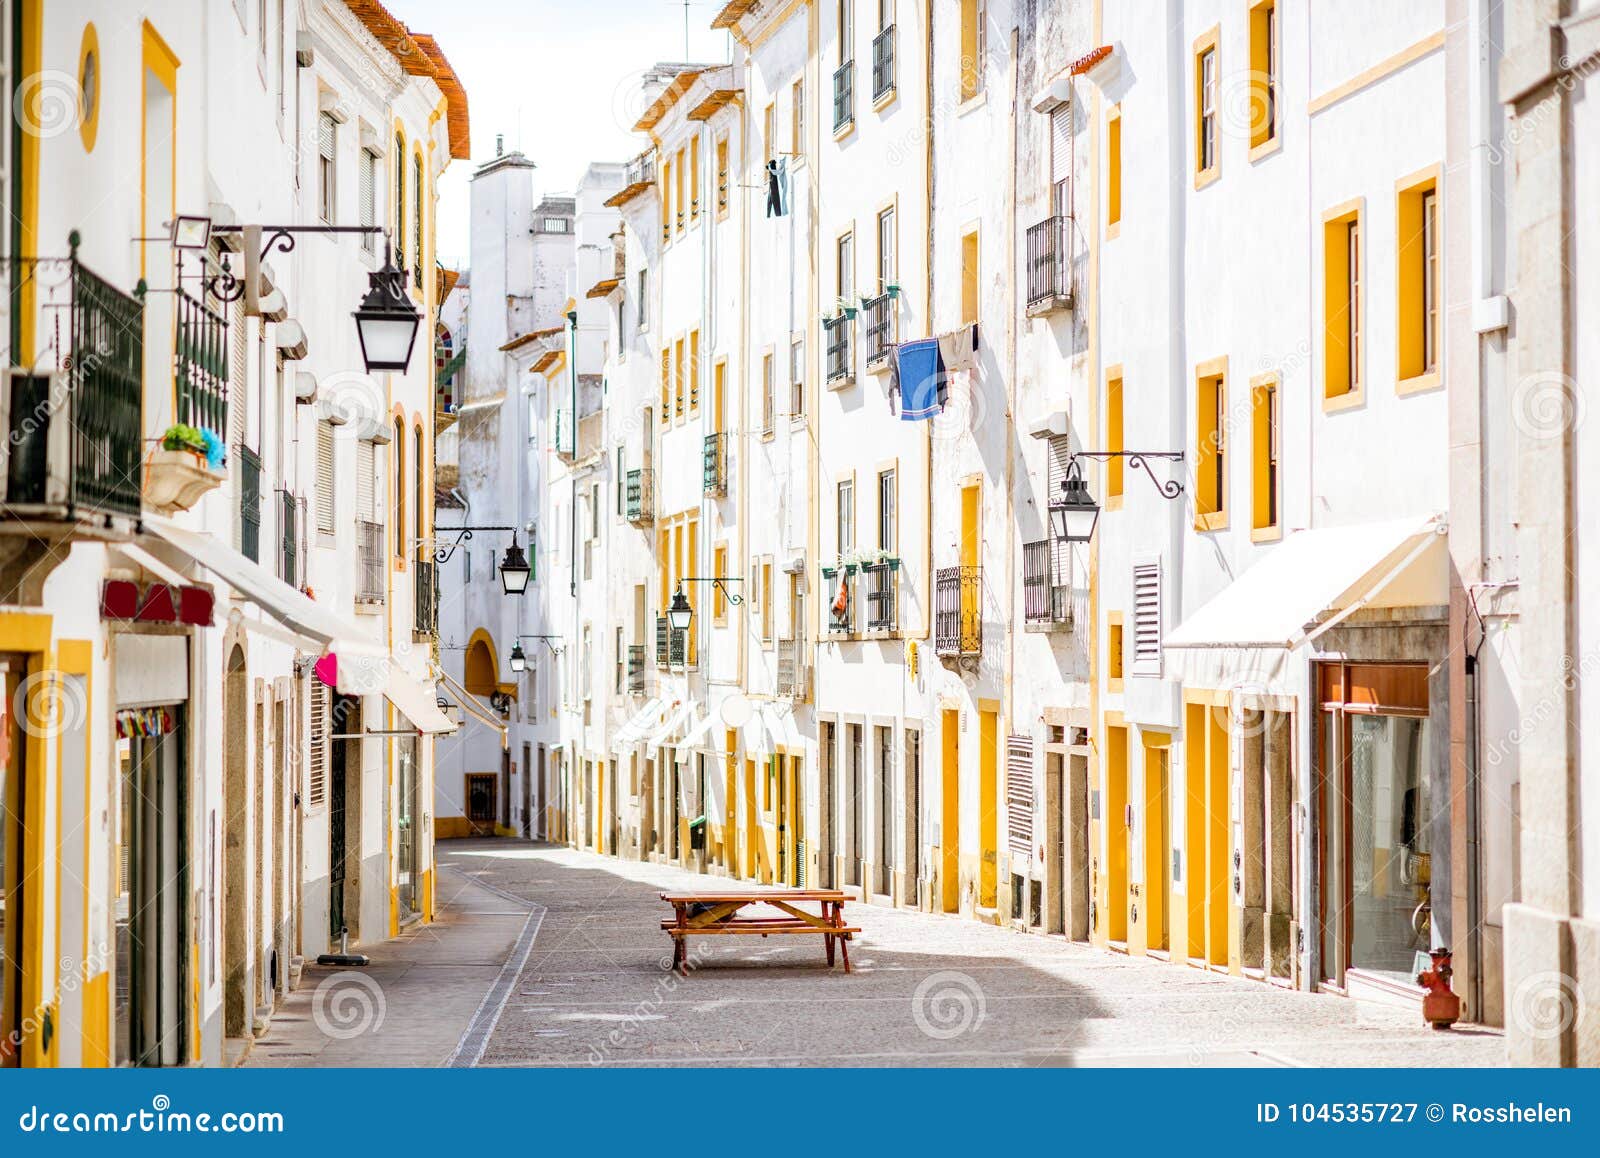 evora old town in portugal